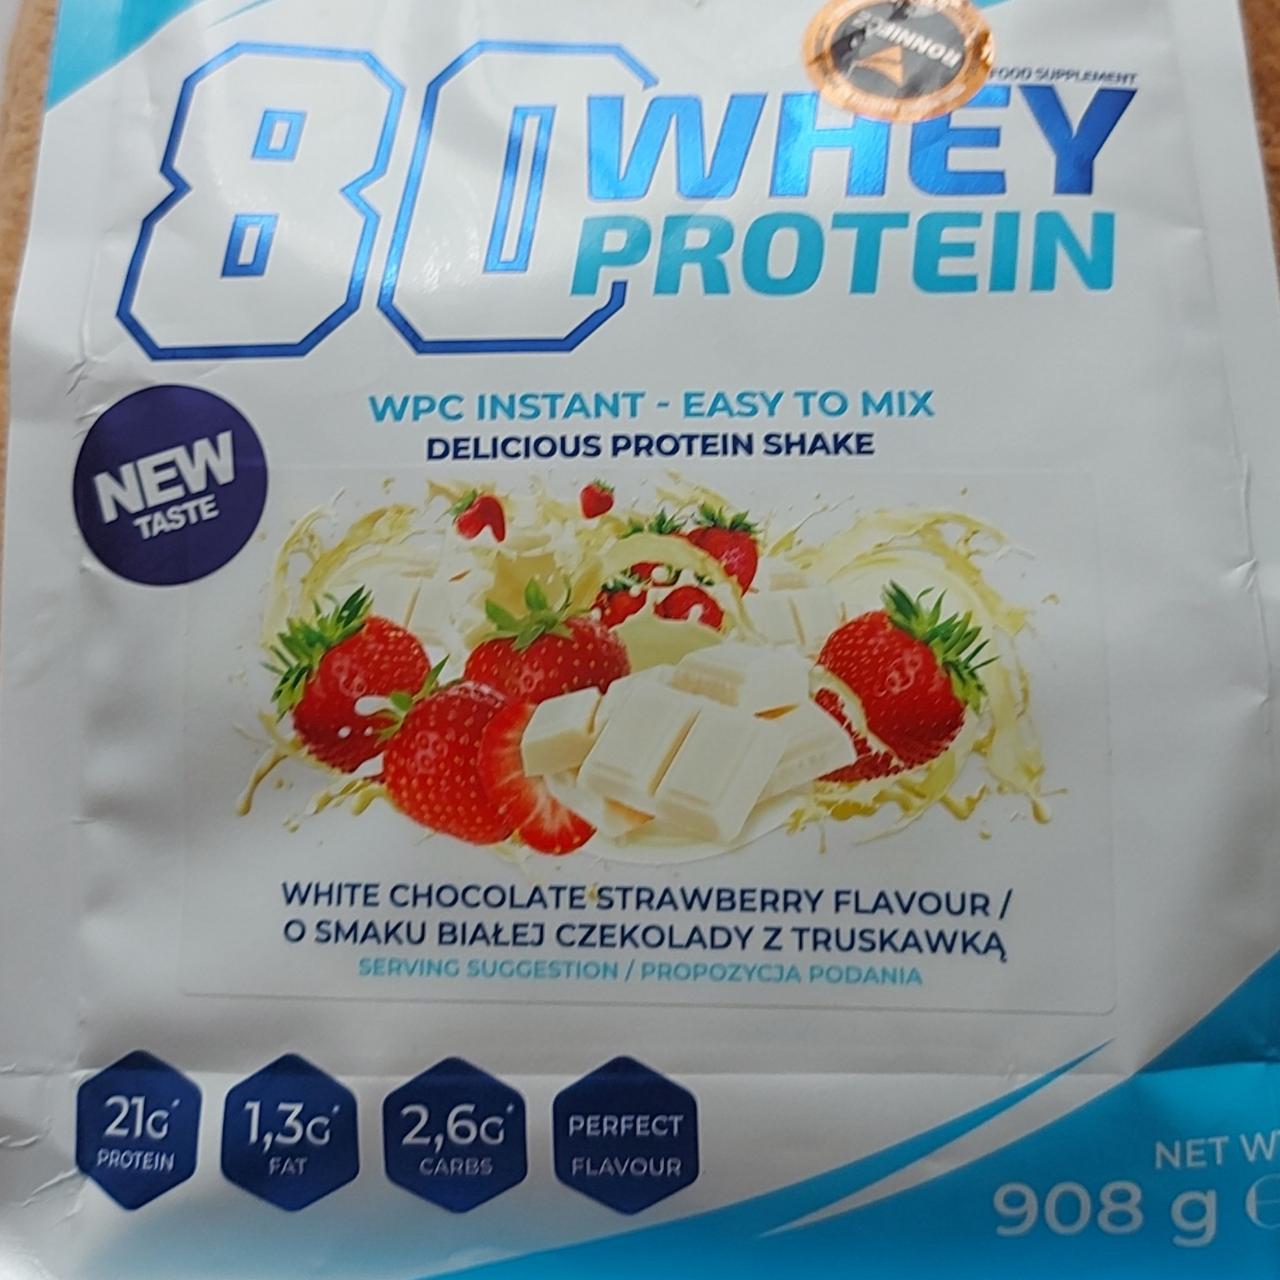 Fotografie - 80 Whey Protein White Chocolate Strawberry 6PAK Nutrition